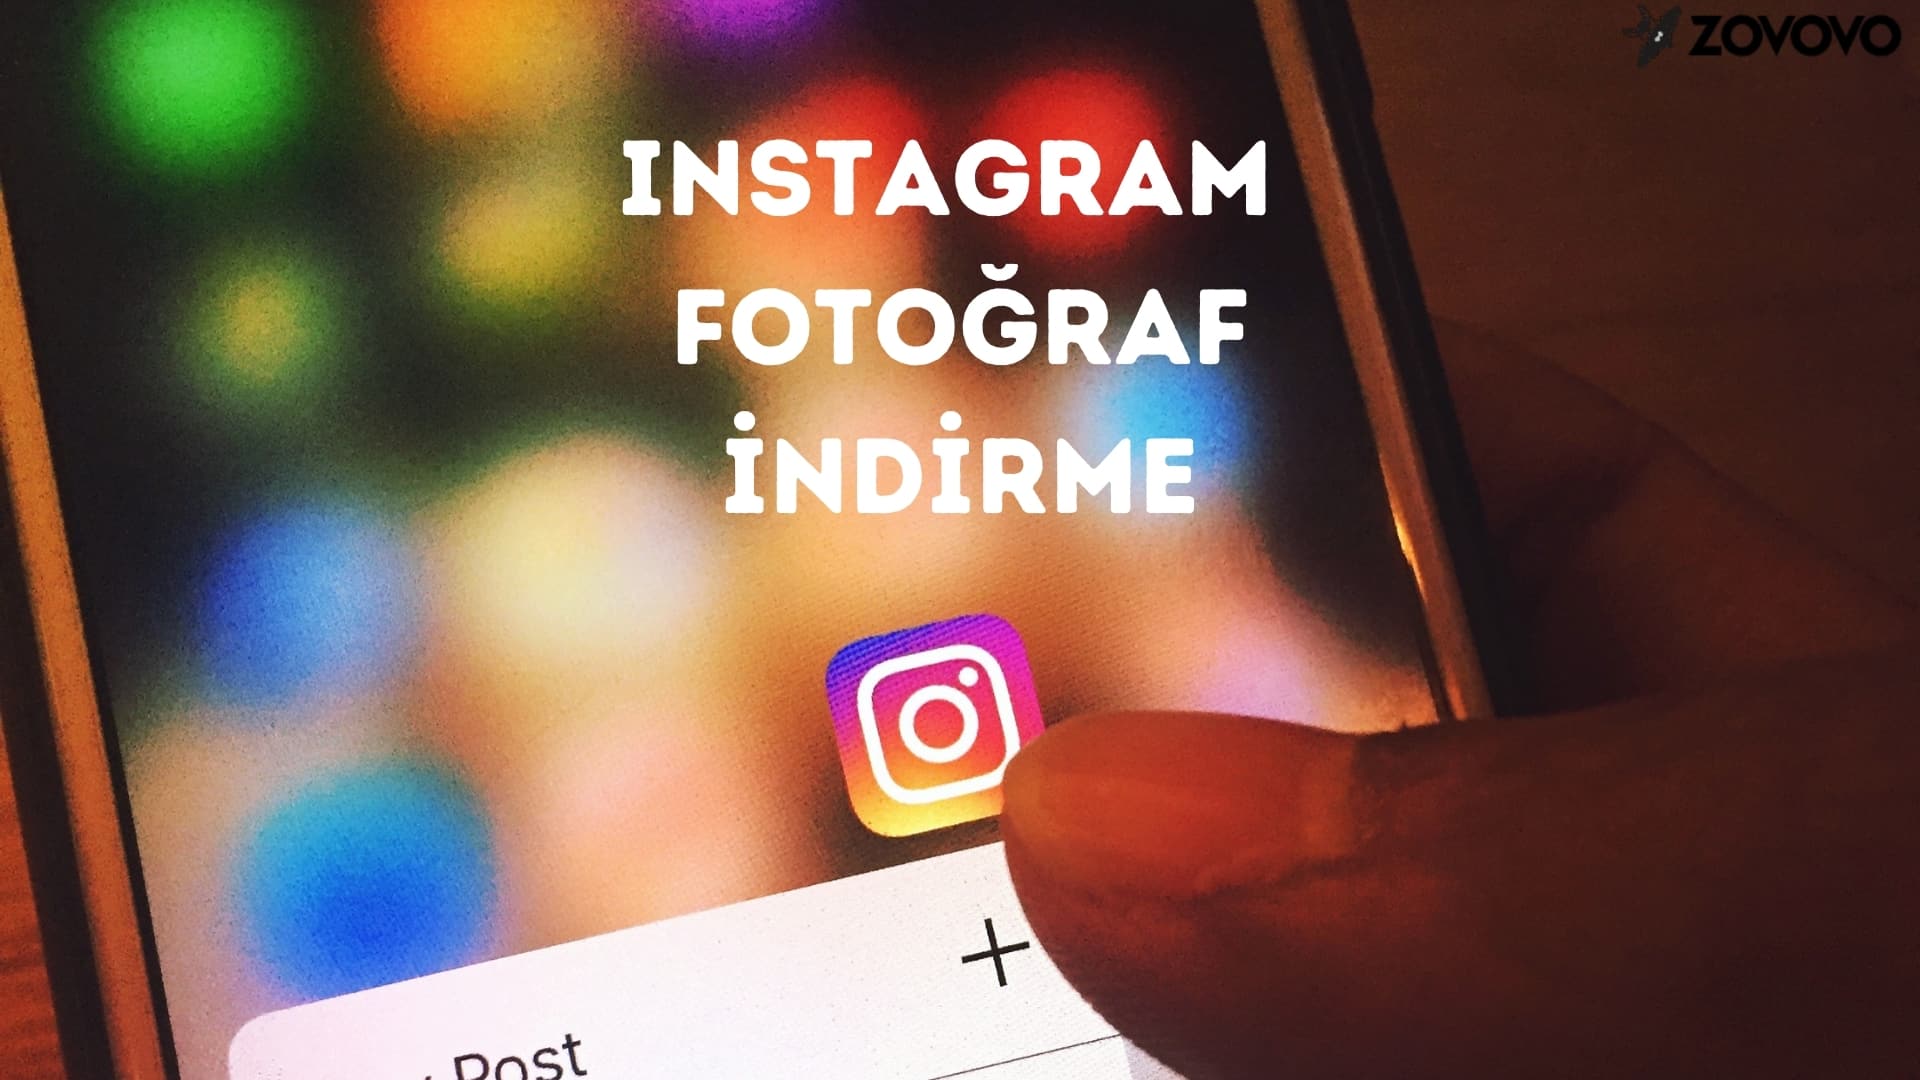 Instagram Fotoğraf İndirme – Instagram Fotoğraf Nasıl İndirilir? – Instagram Fotoğraf İndirme Siteleri 2020